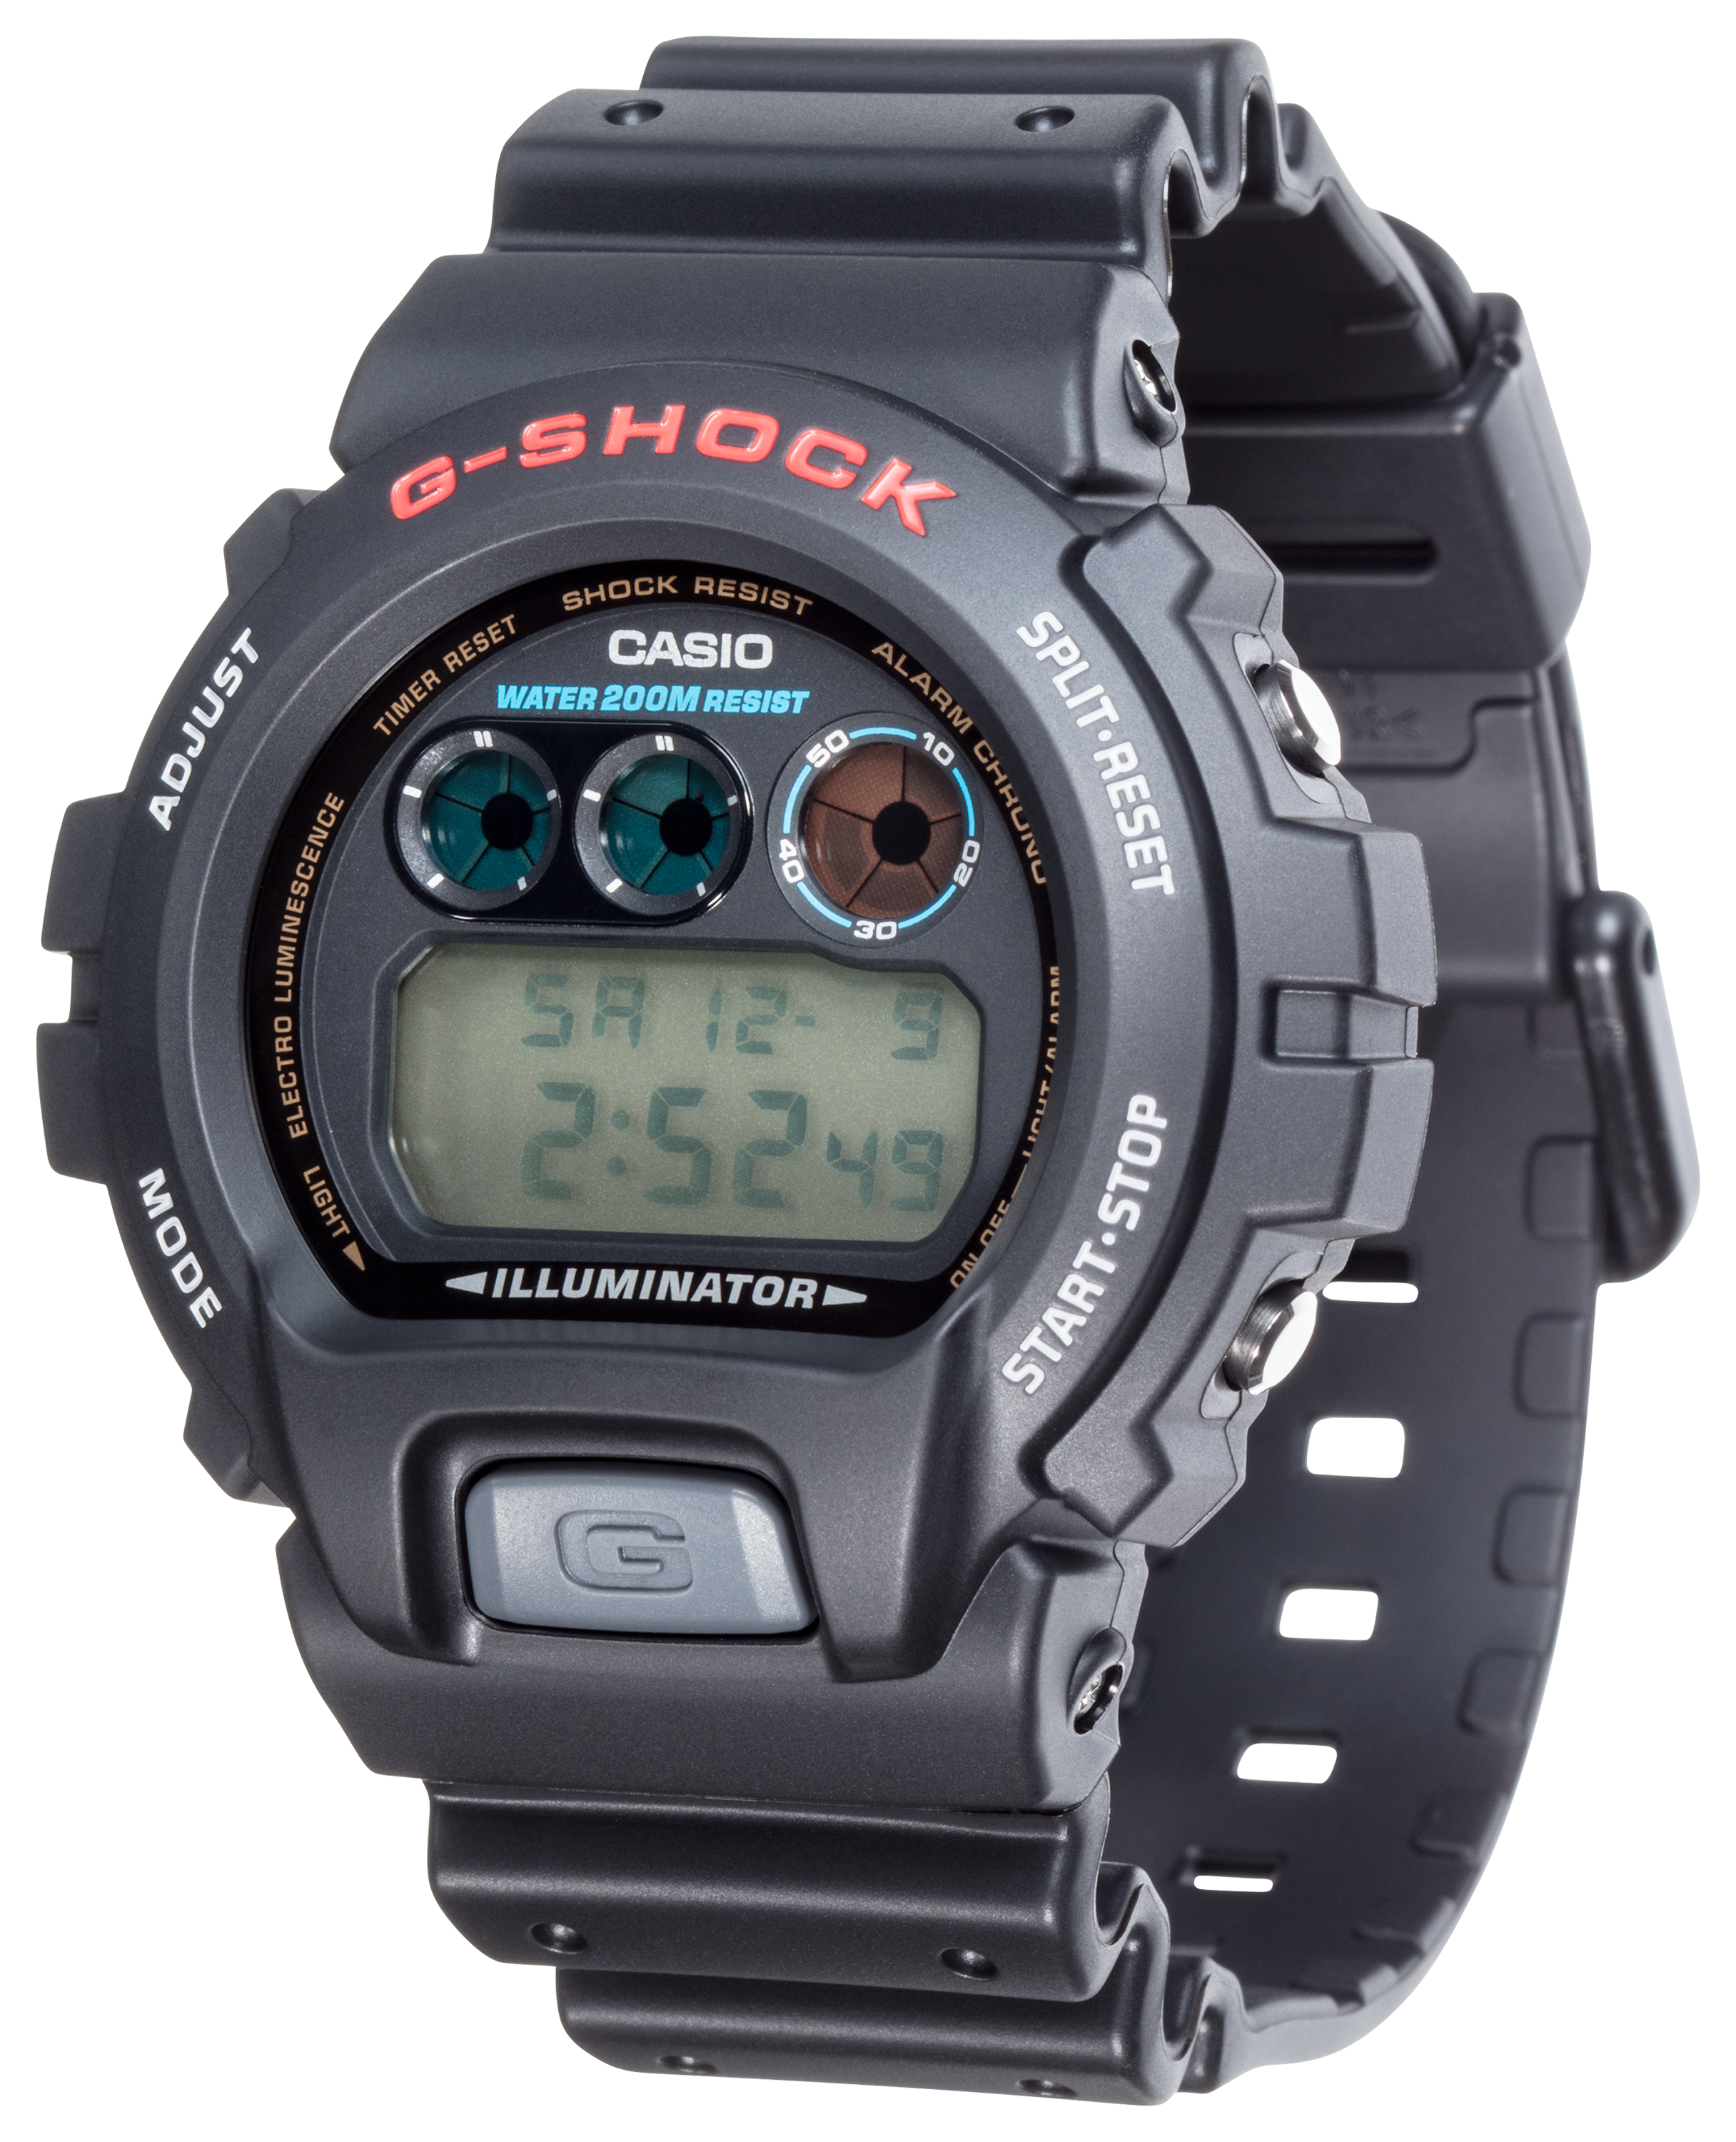 Casio G-Shock Classic Illuminator Watch for Men